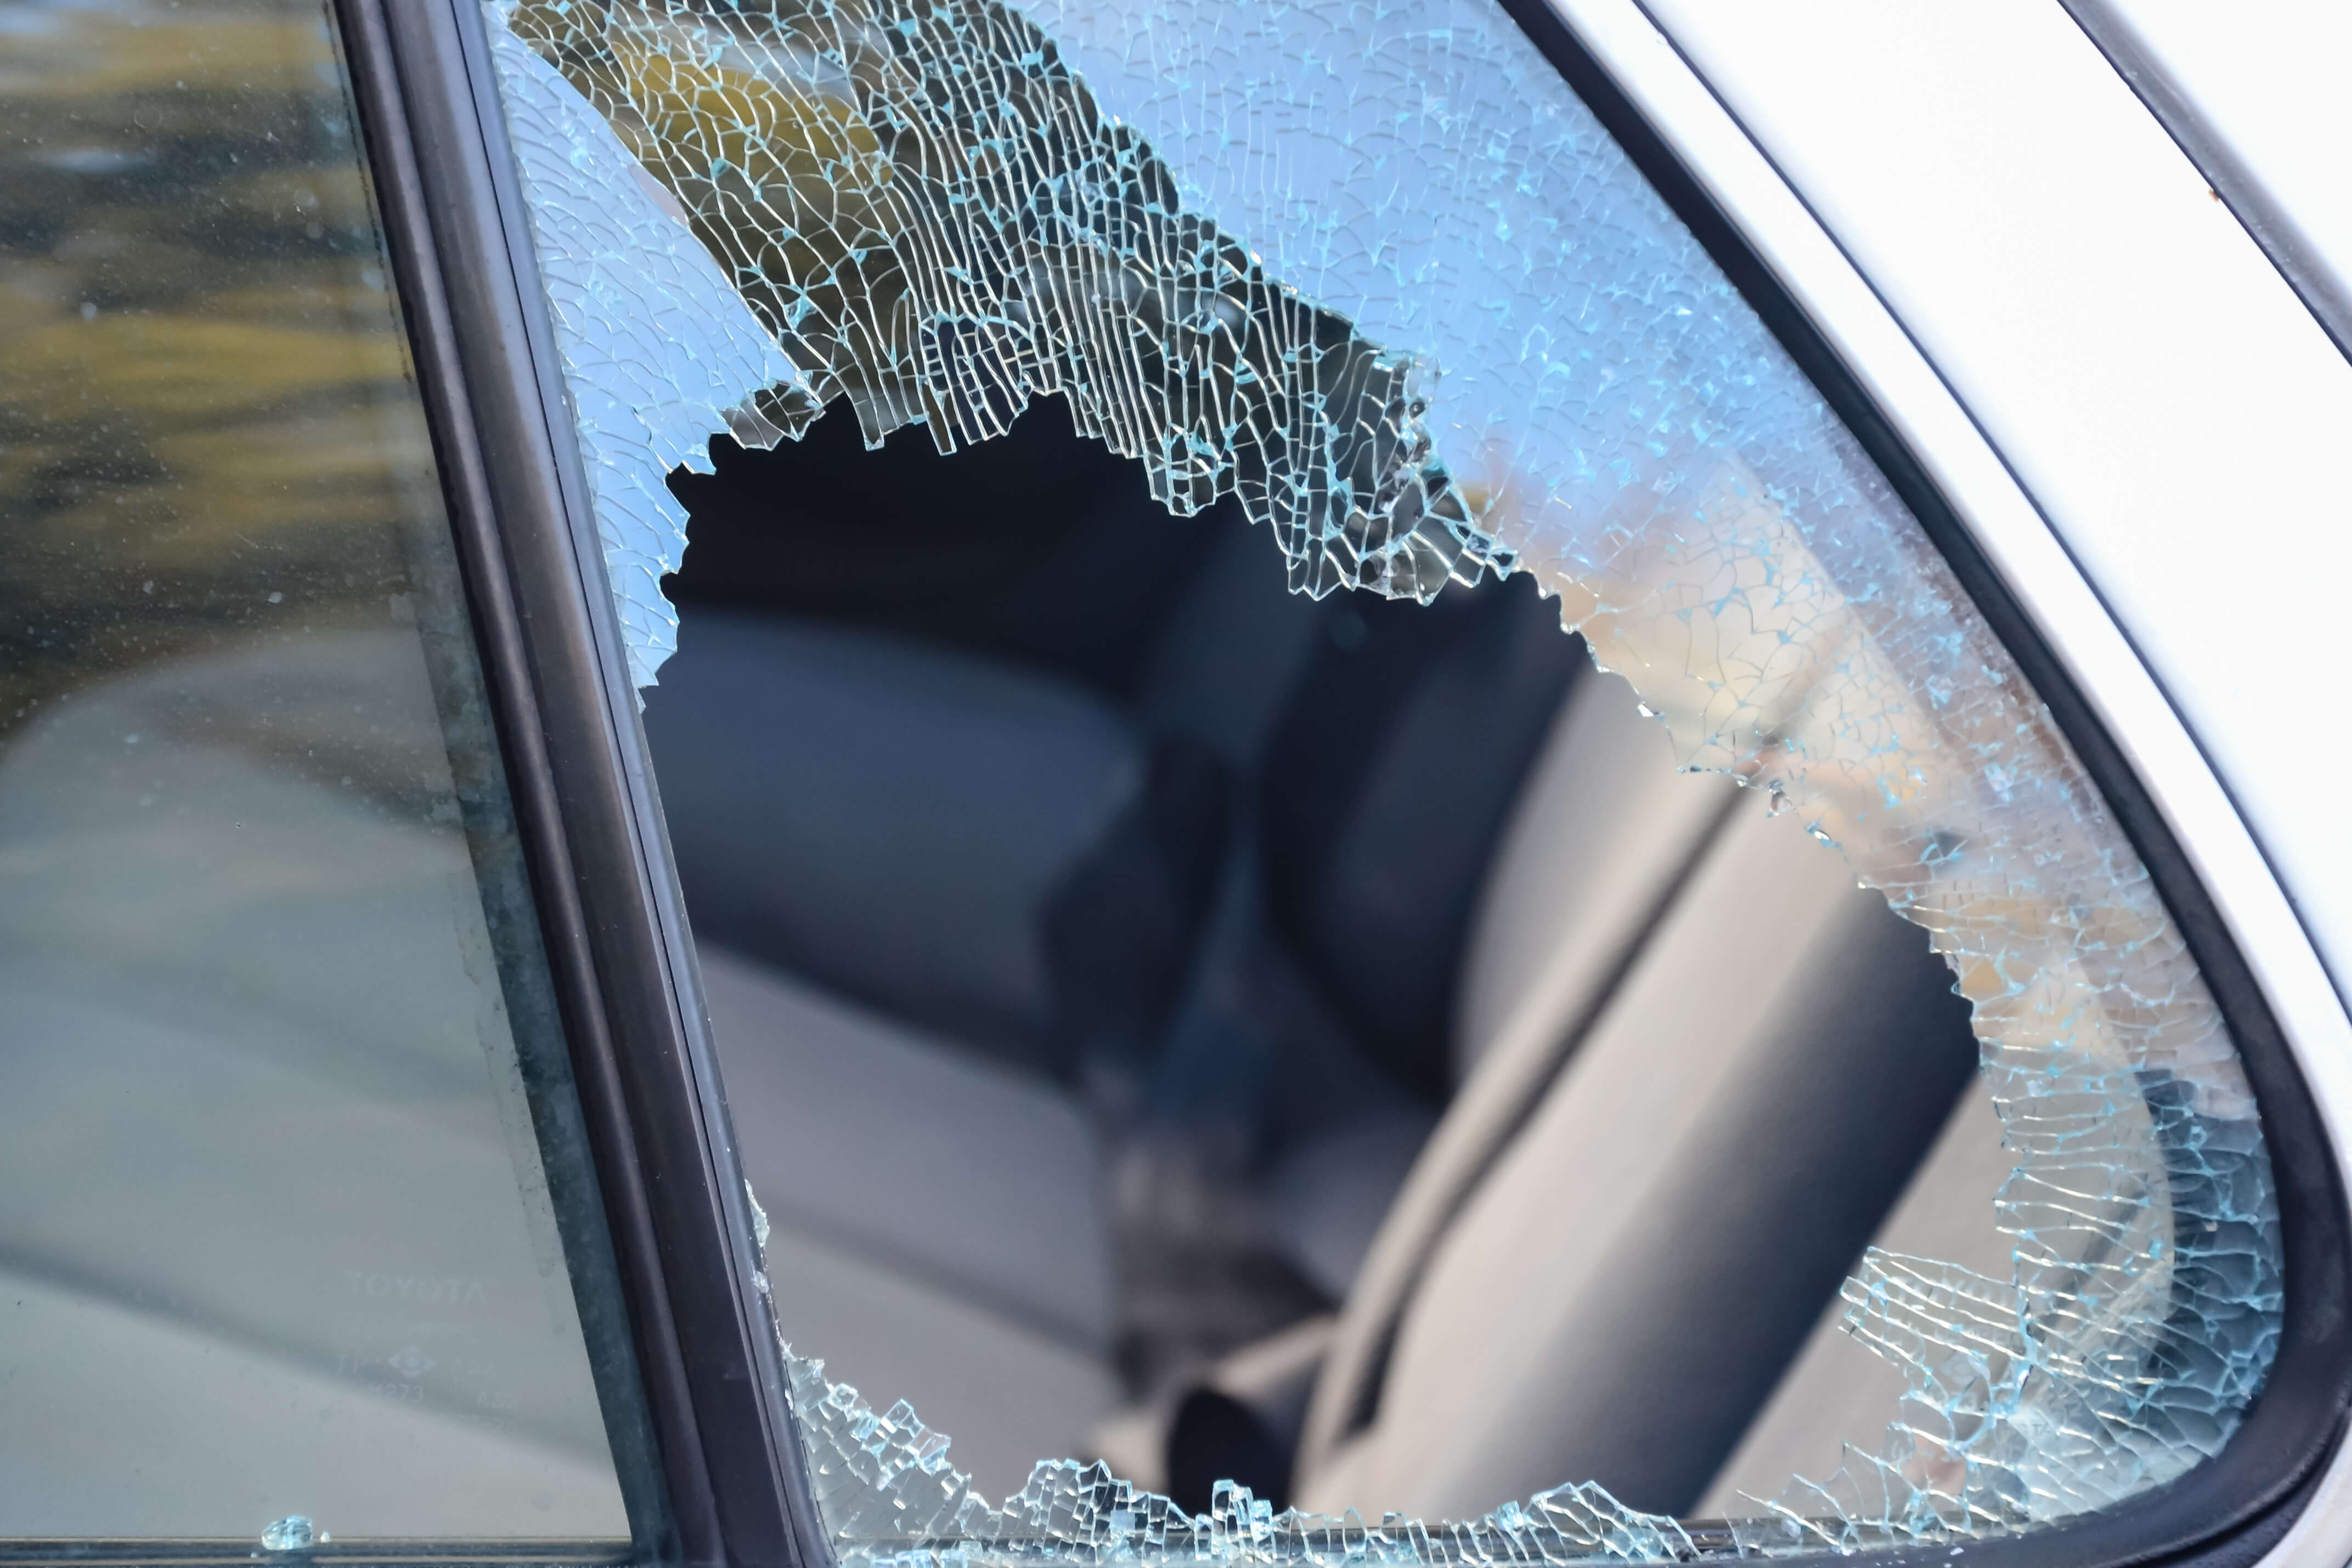 Car Window that was Broken into